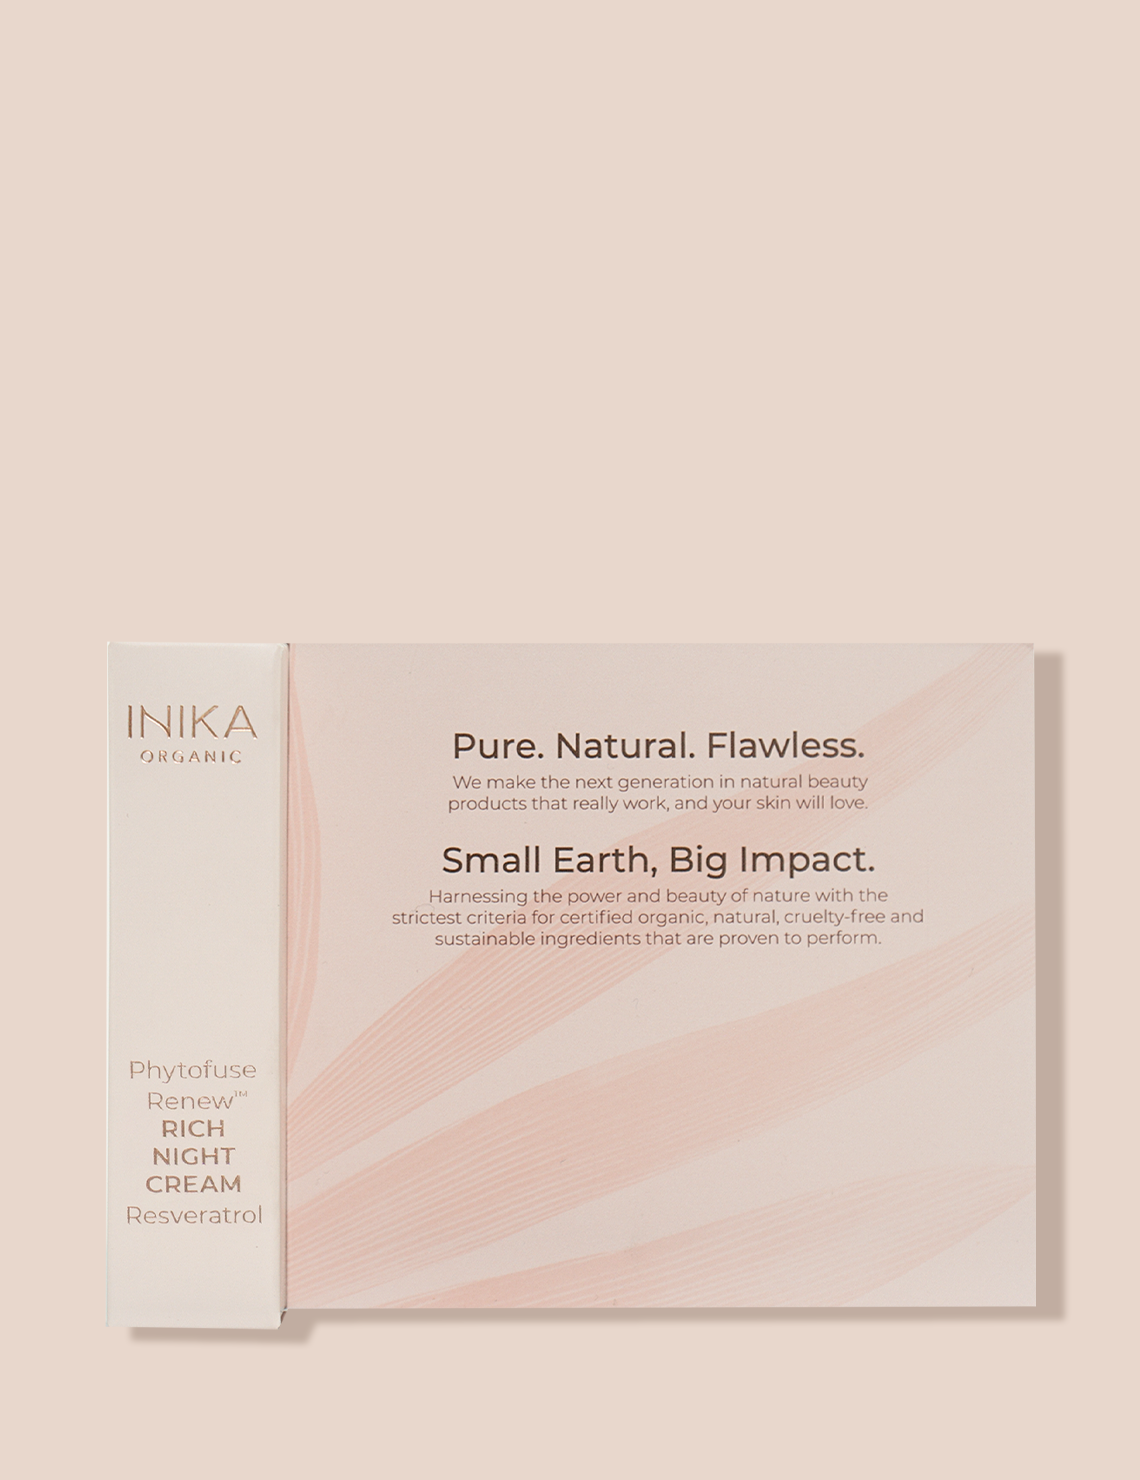 INIKA Organic Phytofuse Renew Rich Night Cream 4ml (Boxed)